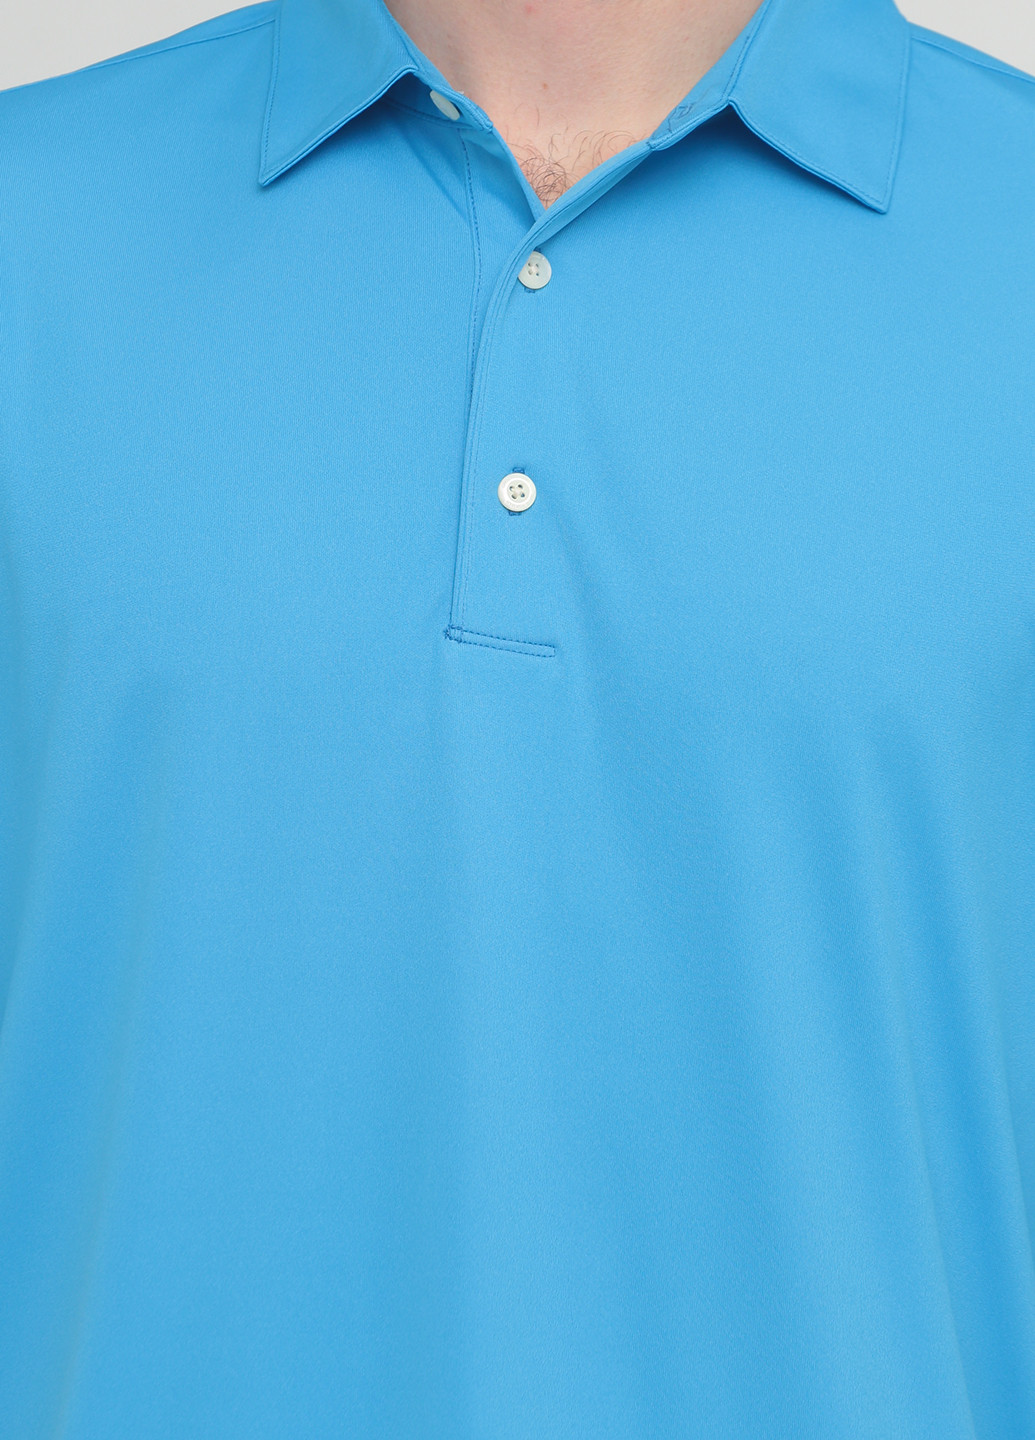 Темно-голубой футболка-поло для мужчин Greg Norman однотонная